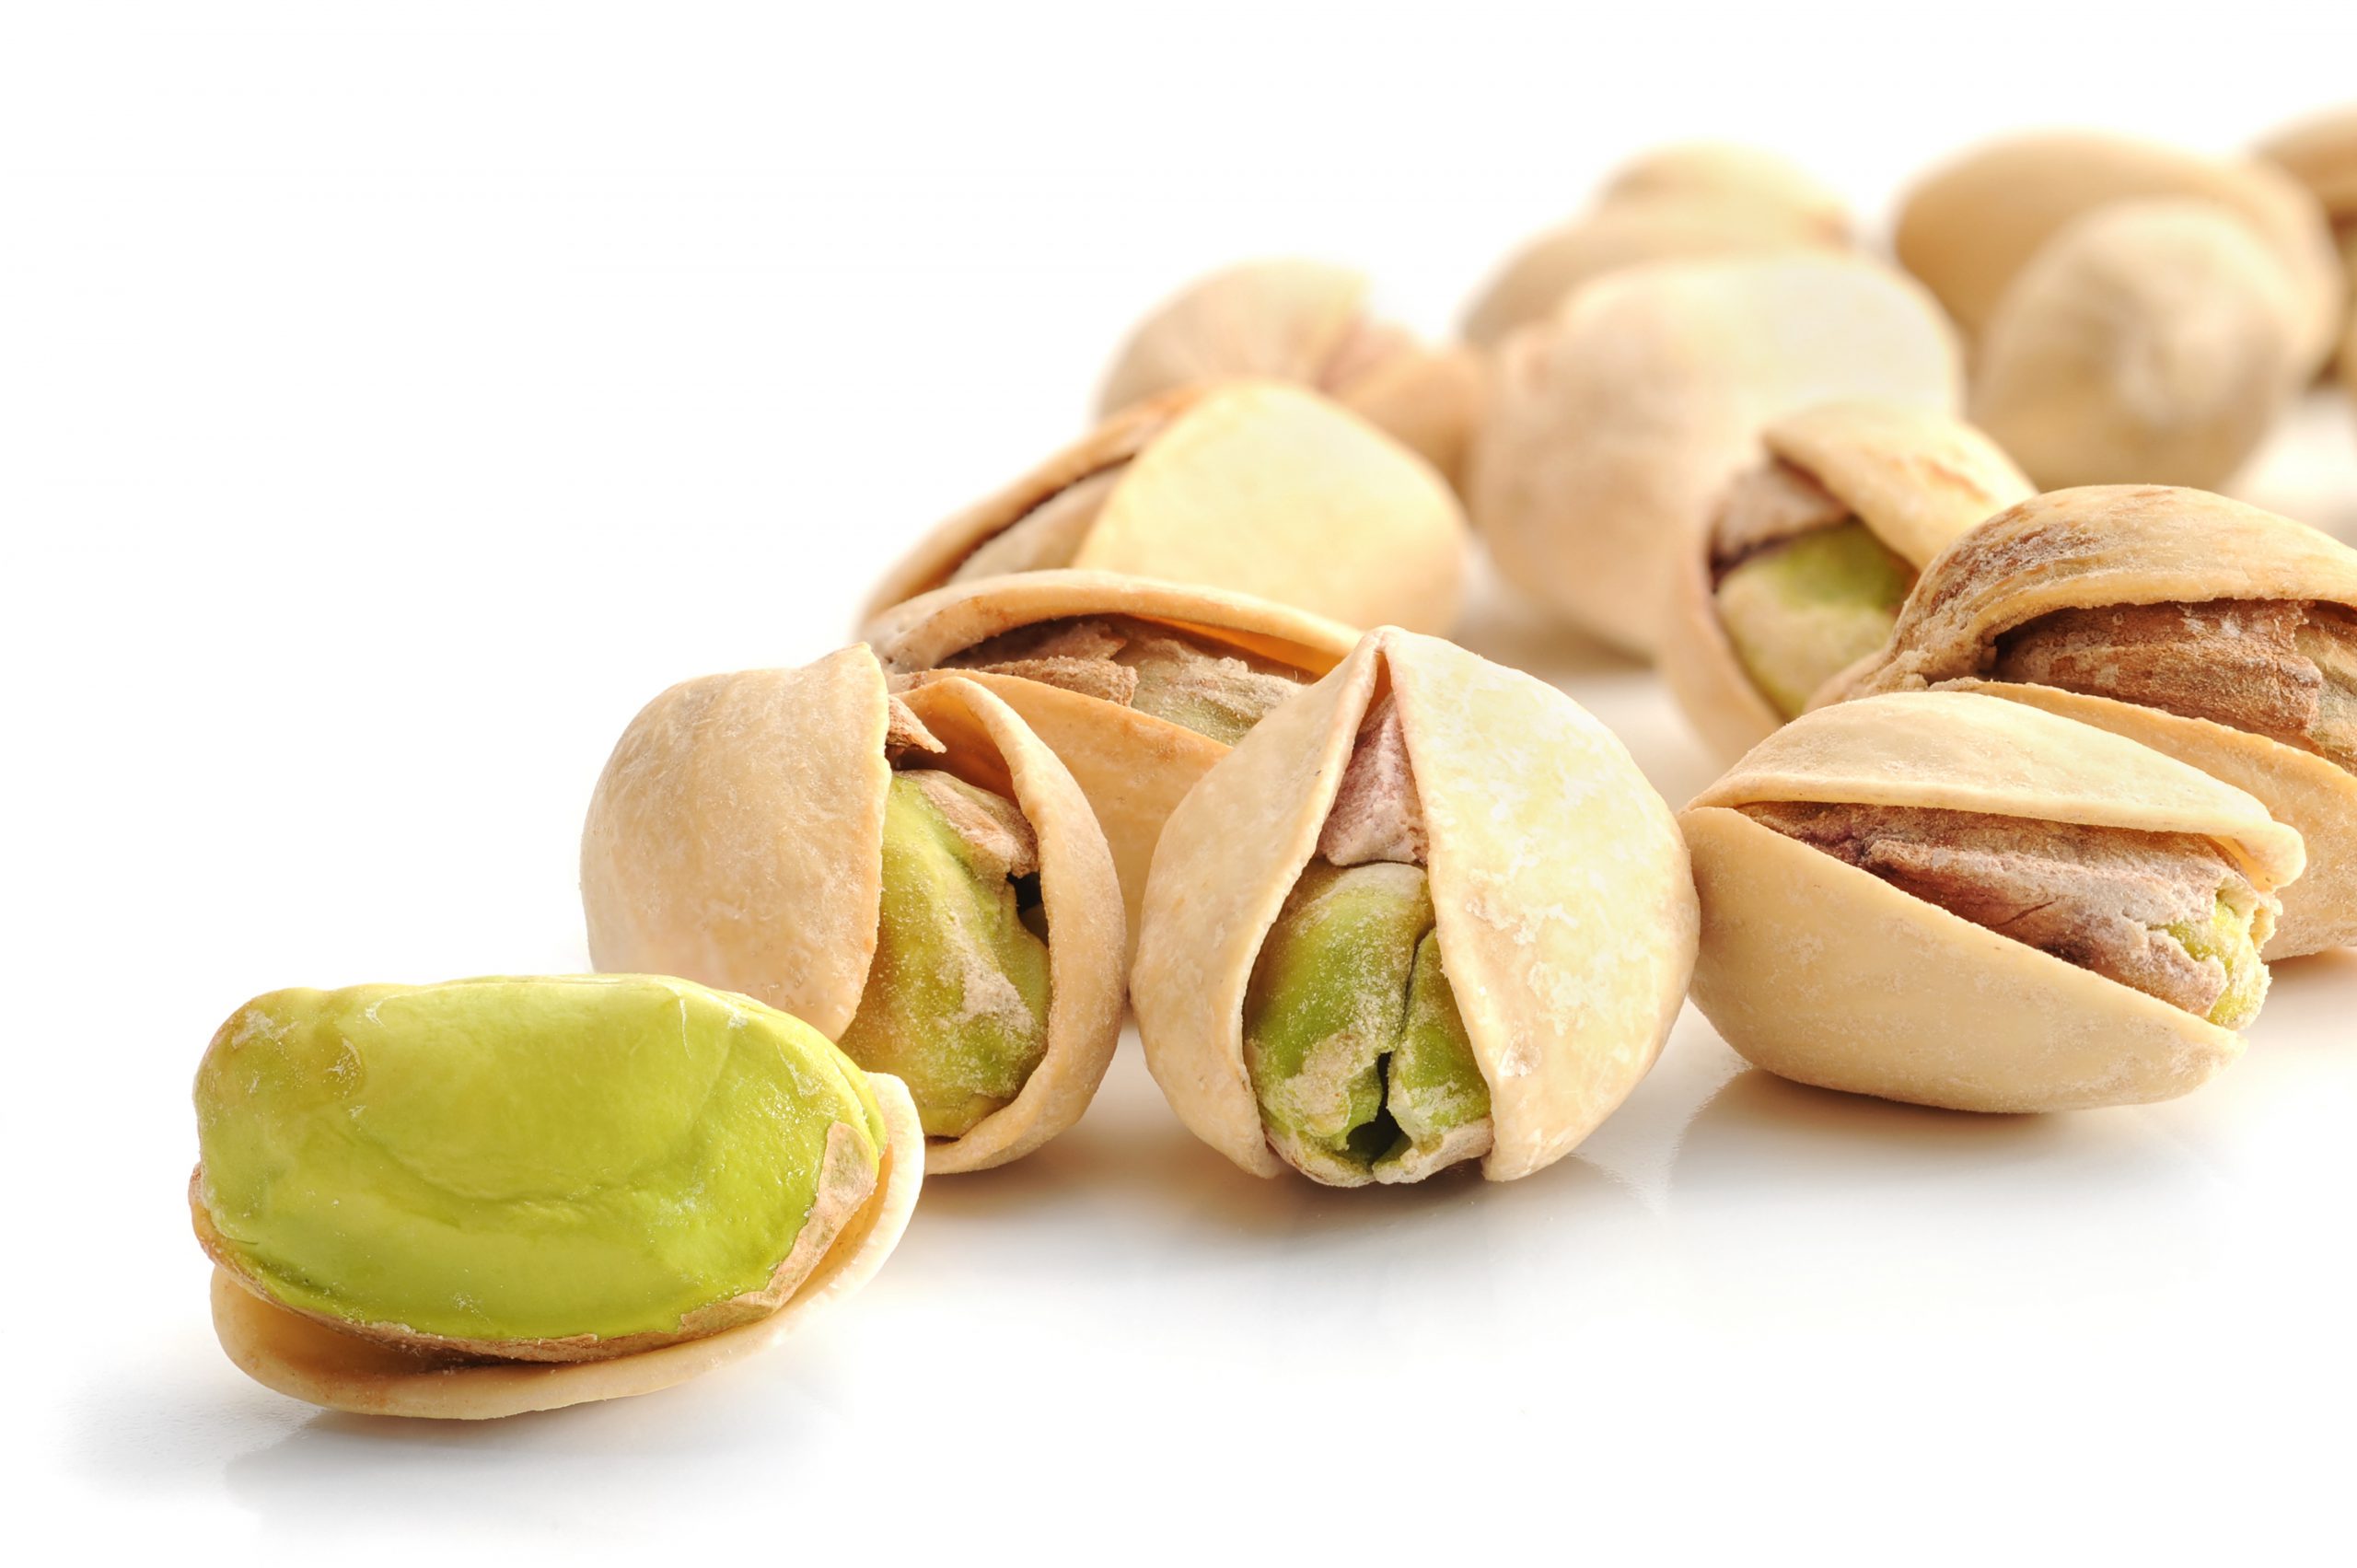 Sale price of raw pistachios in Ukraine